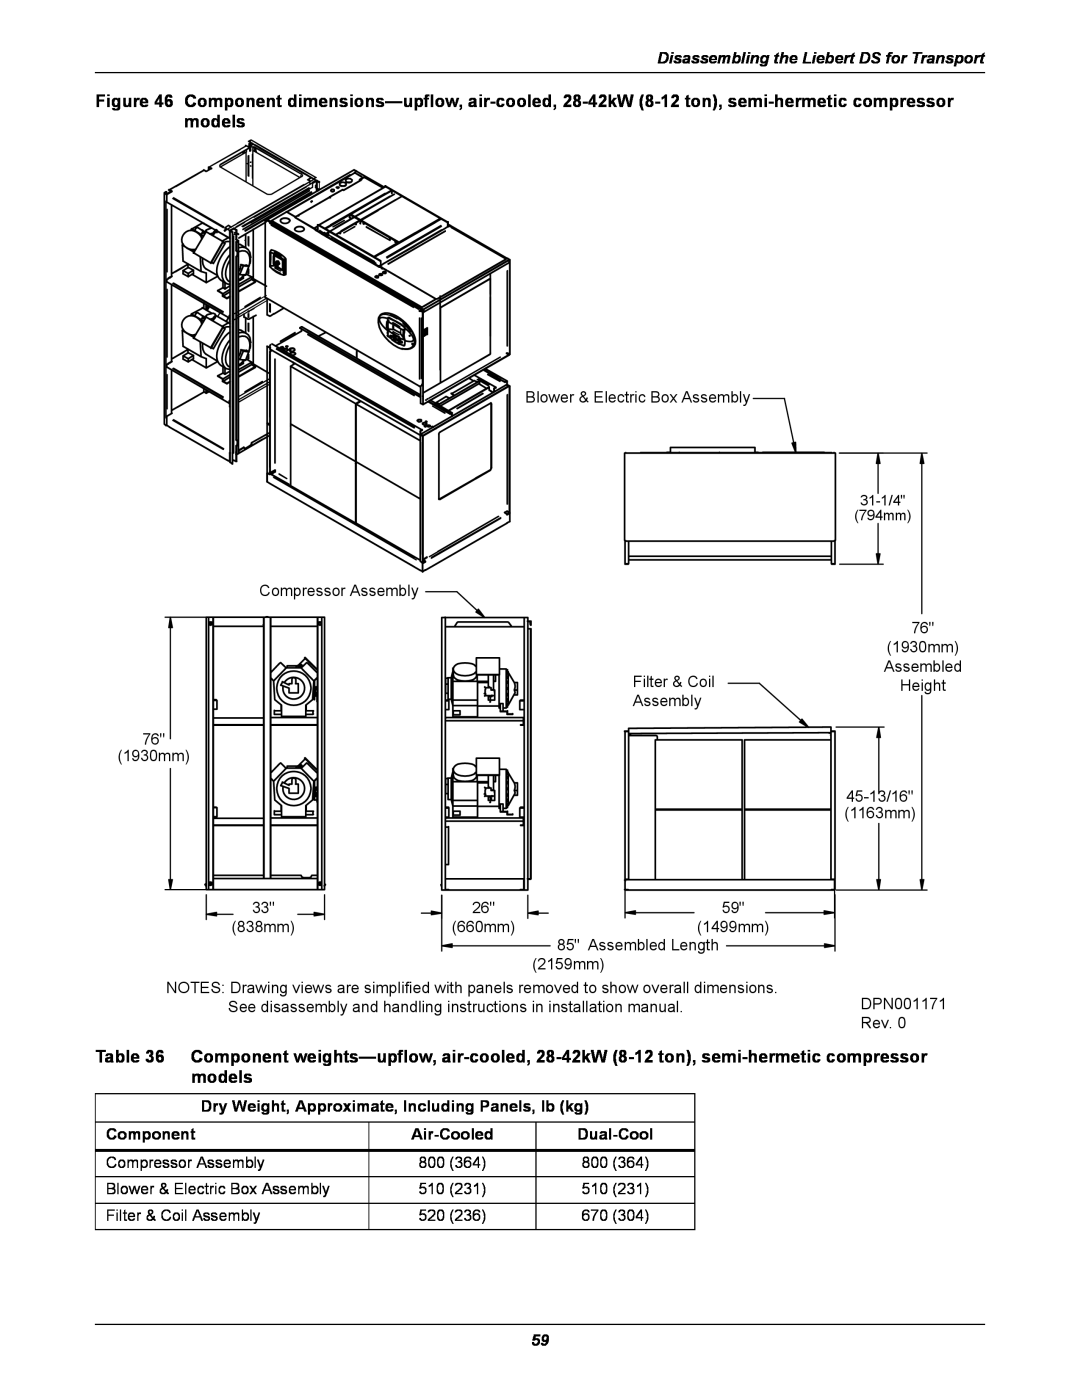 Liebert DS user manual Component dimensions-upflow, air-cooled, 28-42kW 8-12 ton, semi-hermetic compressor models 